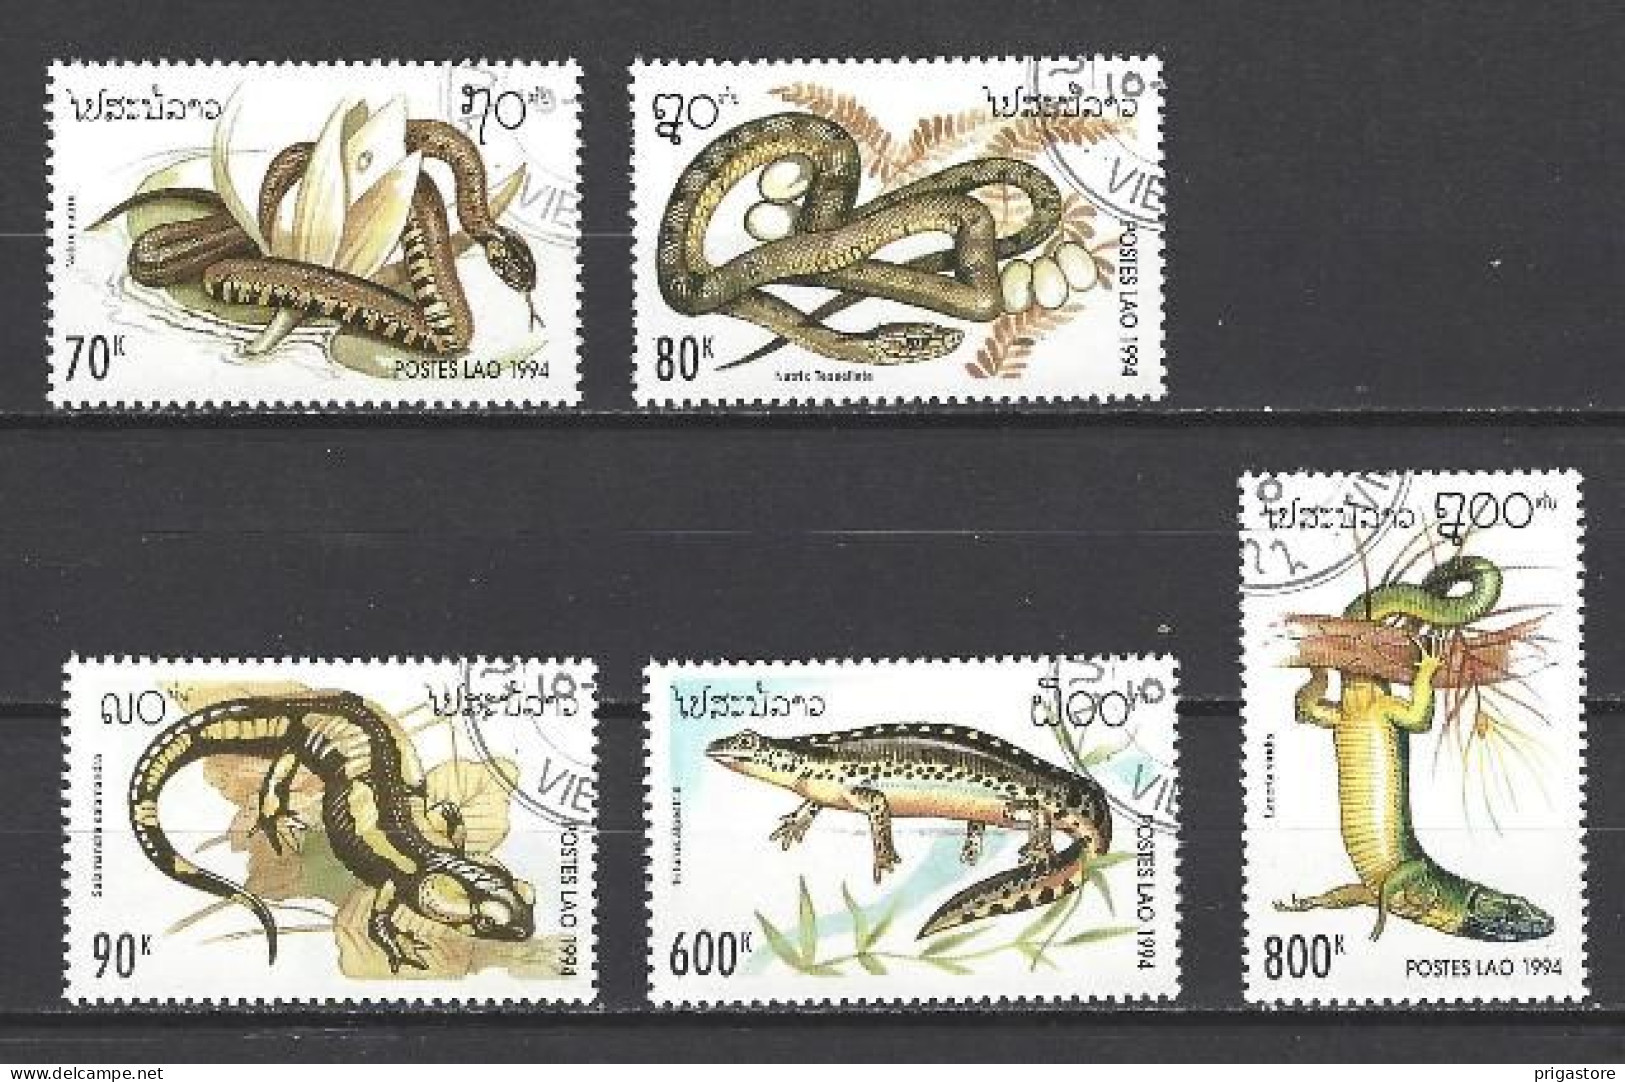 Animaux Reptiles Laos 1994 (124) Yvert N° 1134 à 1138 Oblitérés Used - Snakes